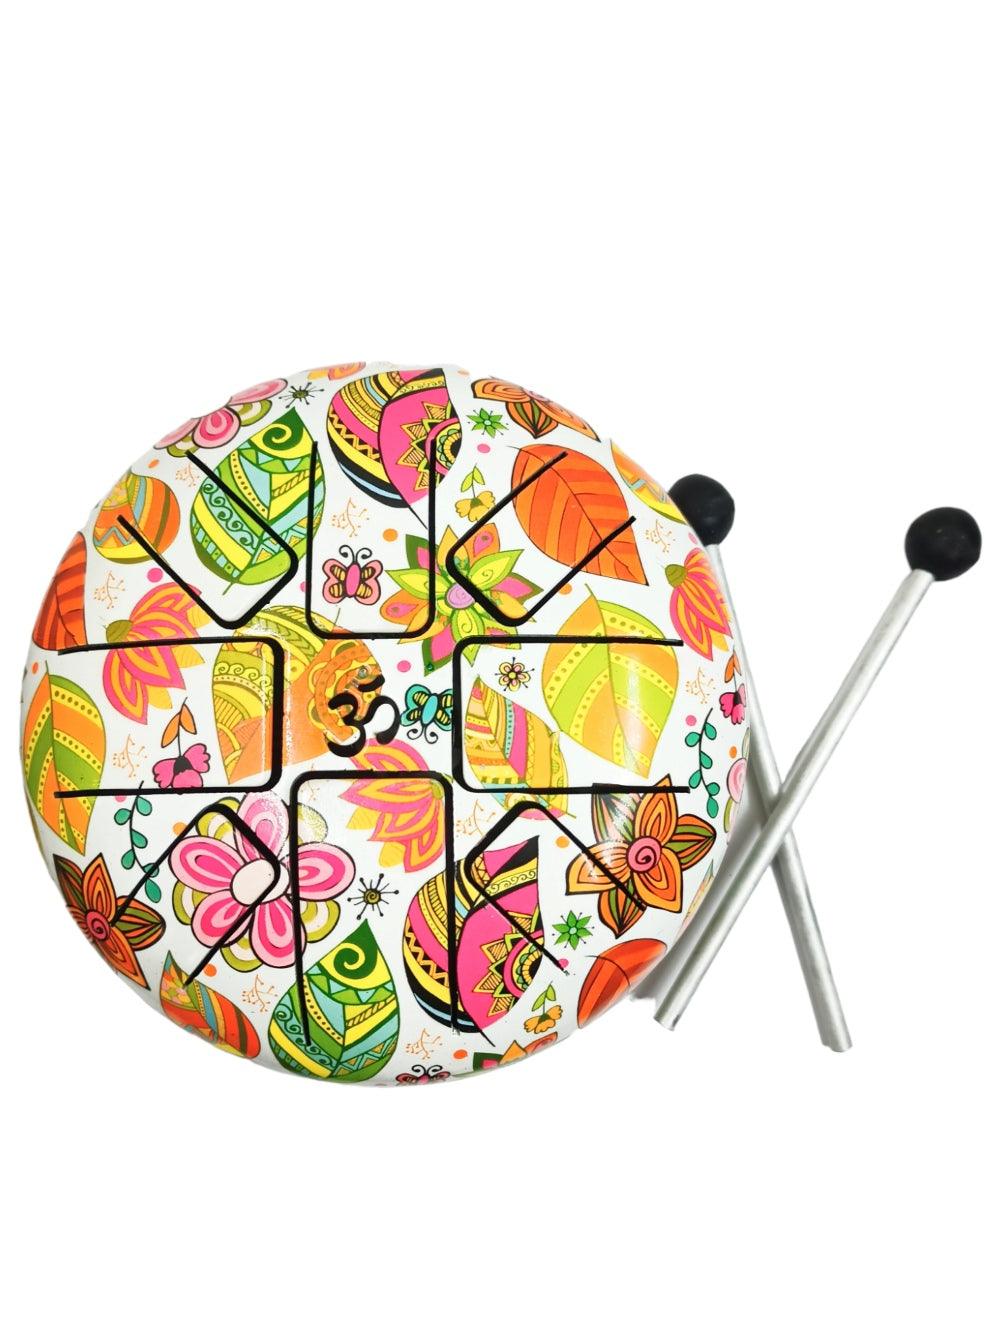 Hapi Drum 6 inch | Musical Drum | Happy Musical Drum - ZANSKAR ARTS